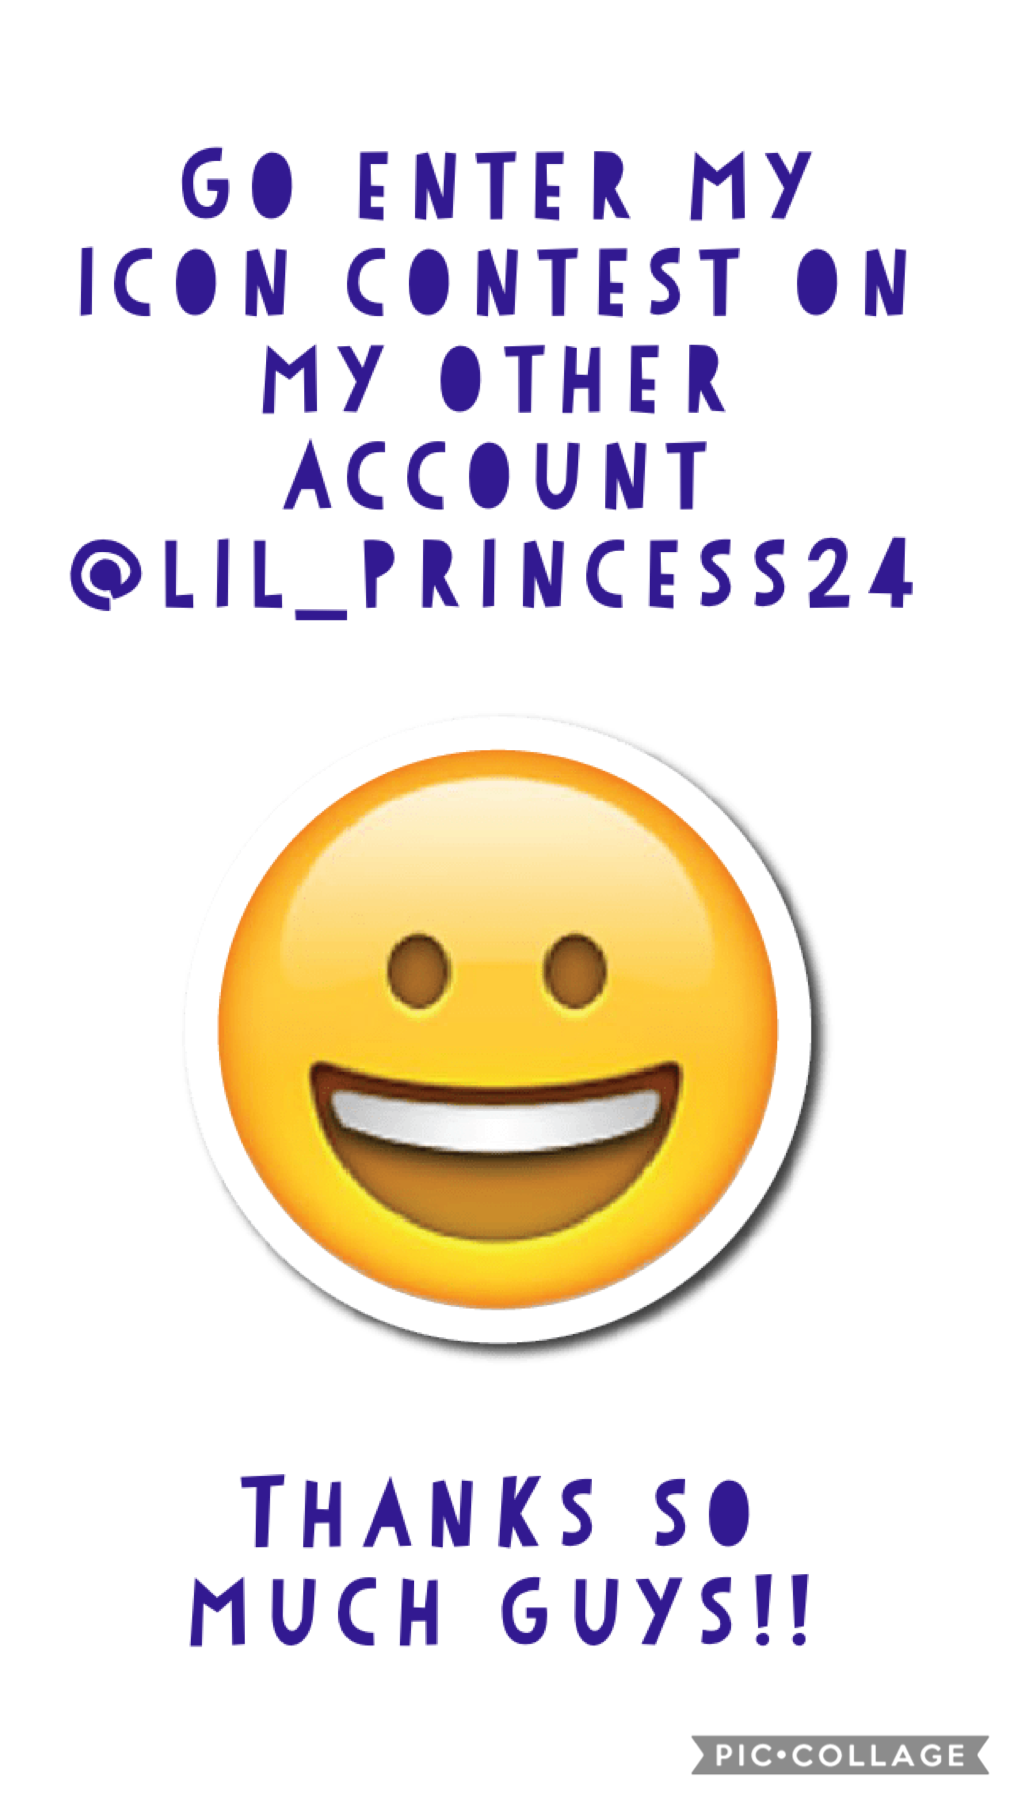 @lil_princess24